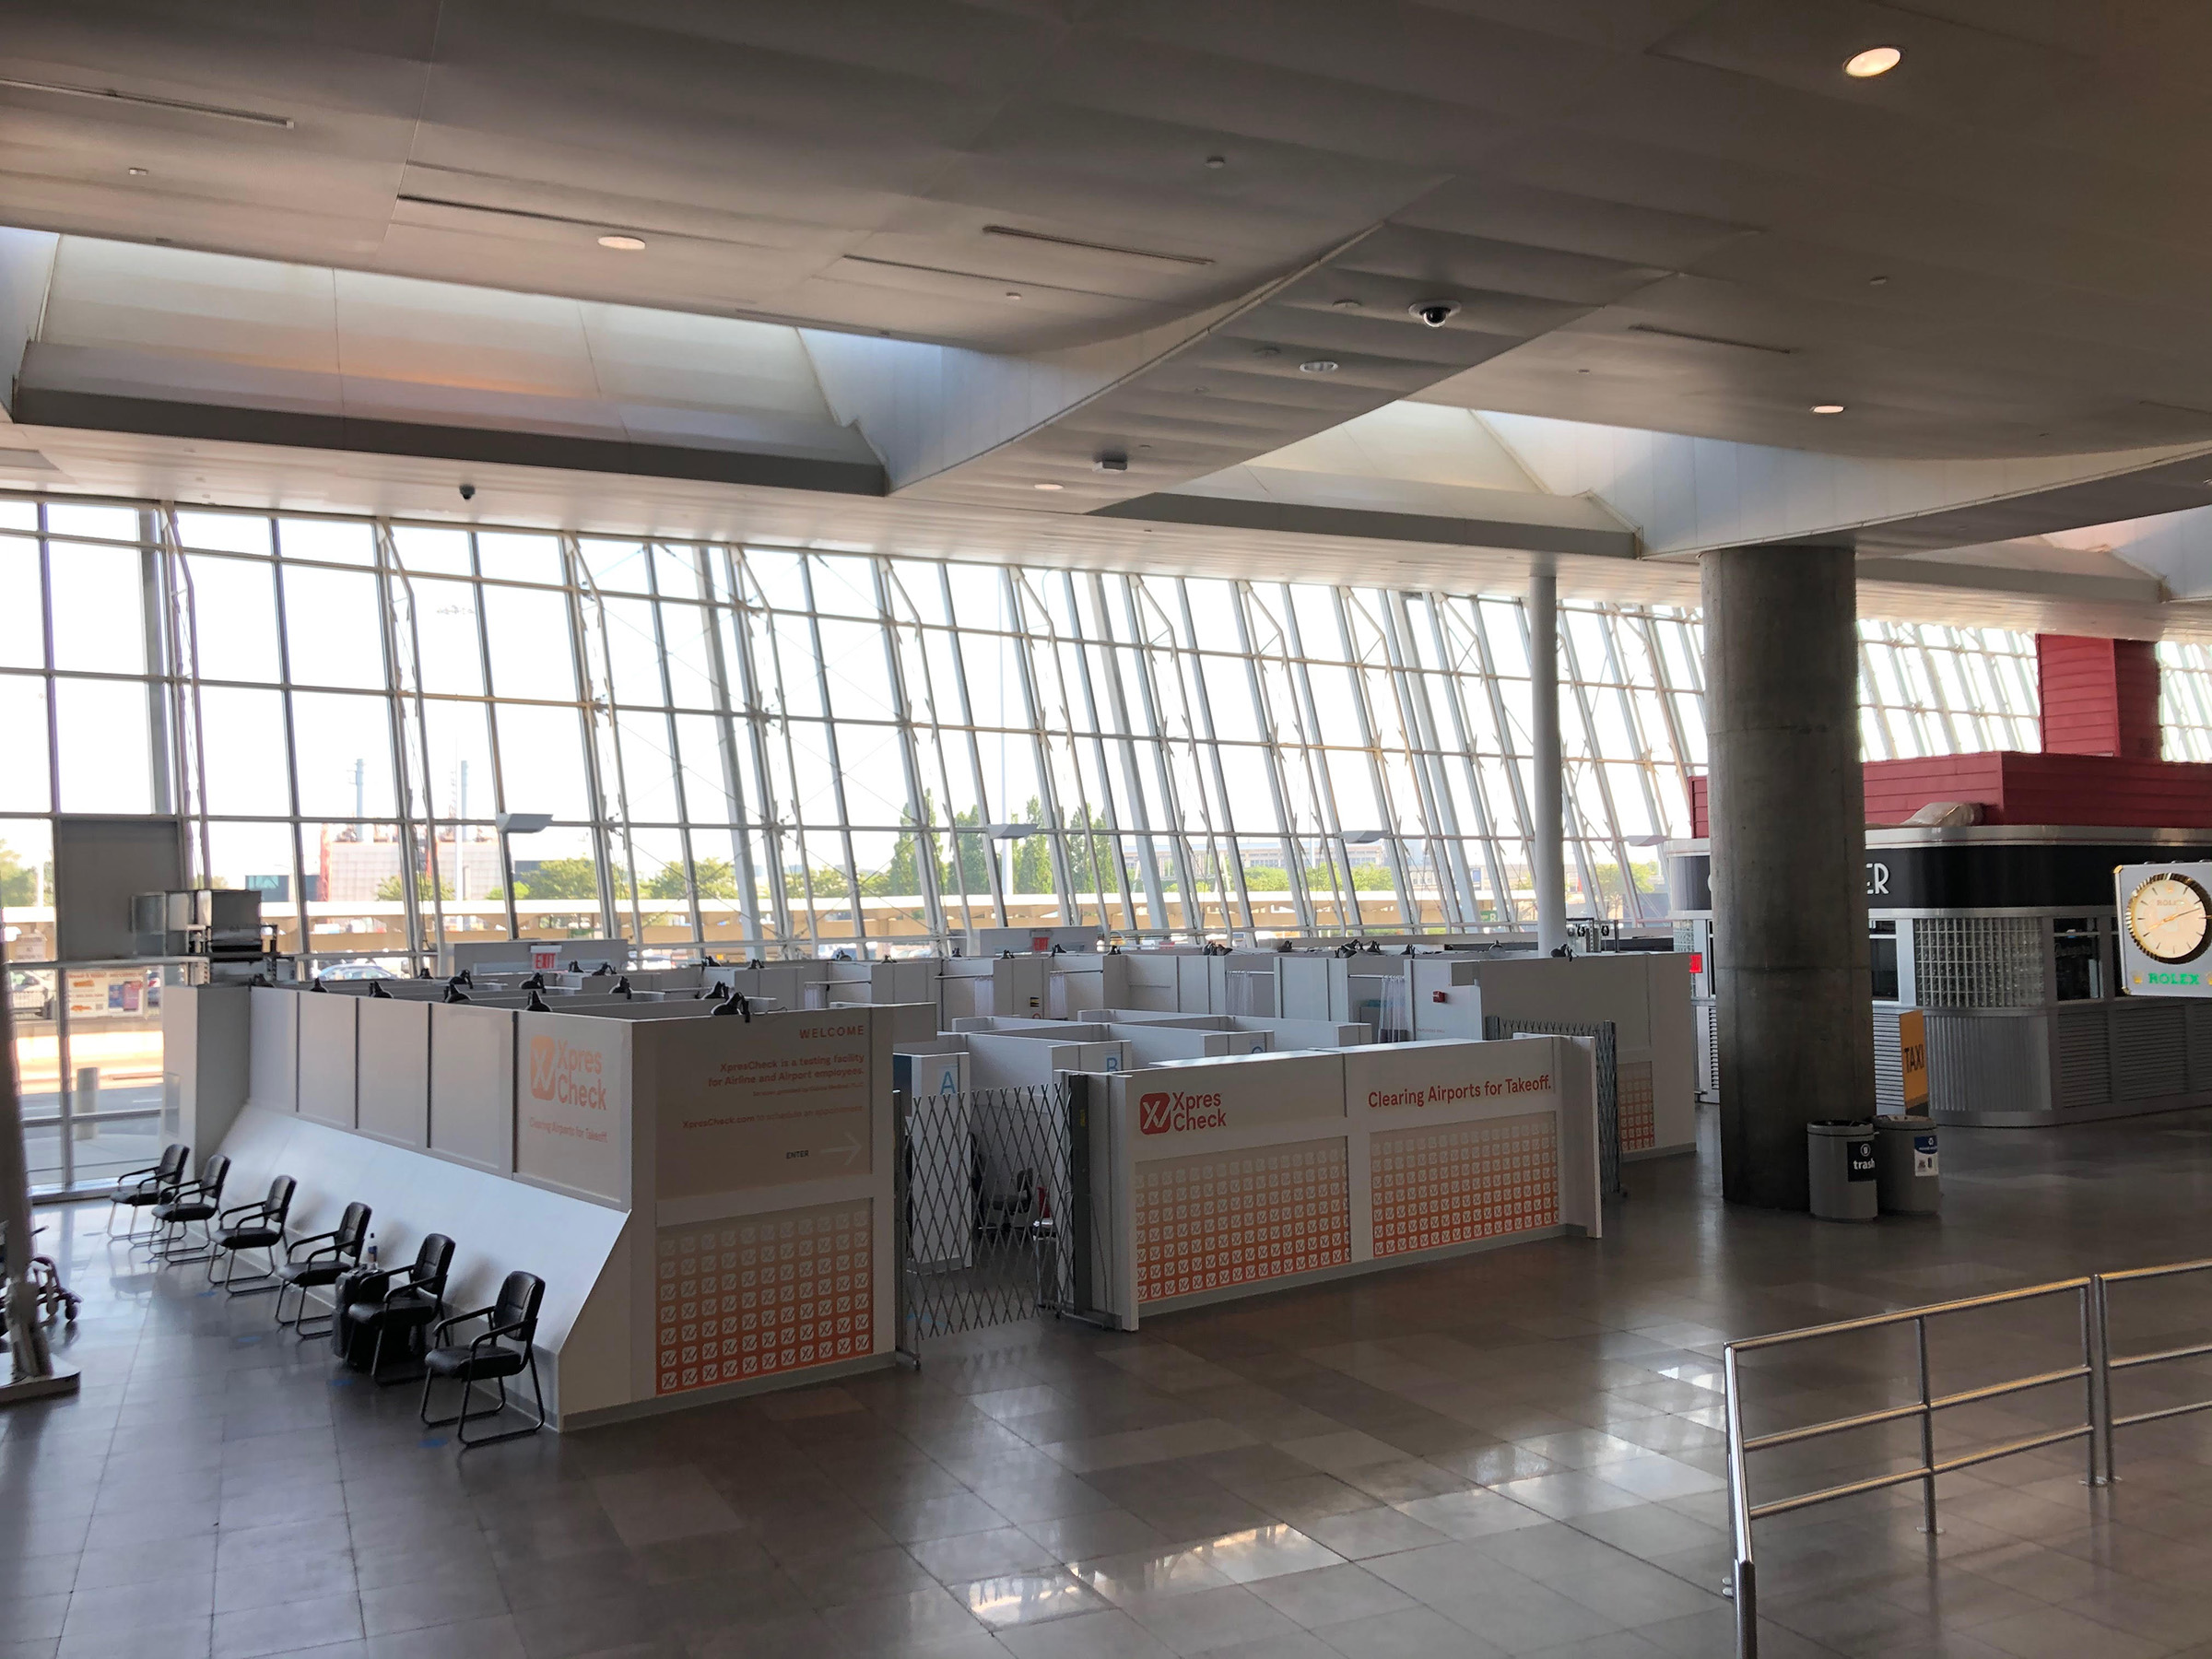 The XpresSpa testing site in Terminal 4 of JFK Airport. (Courtesy of XpresSpa)